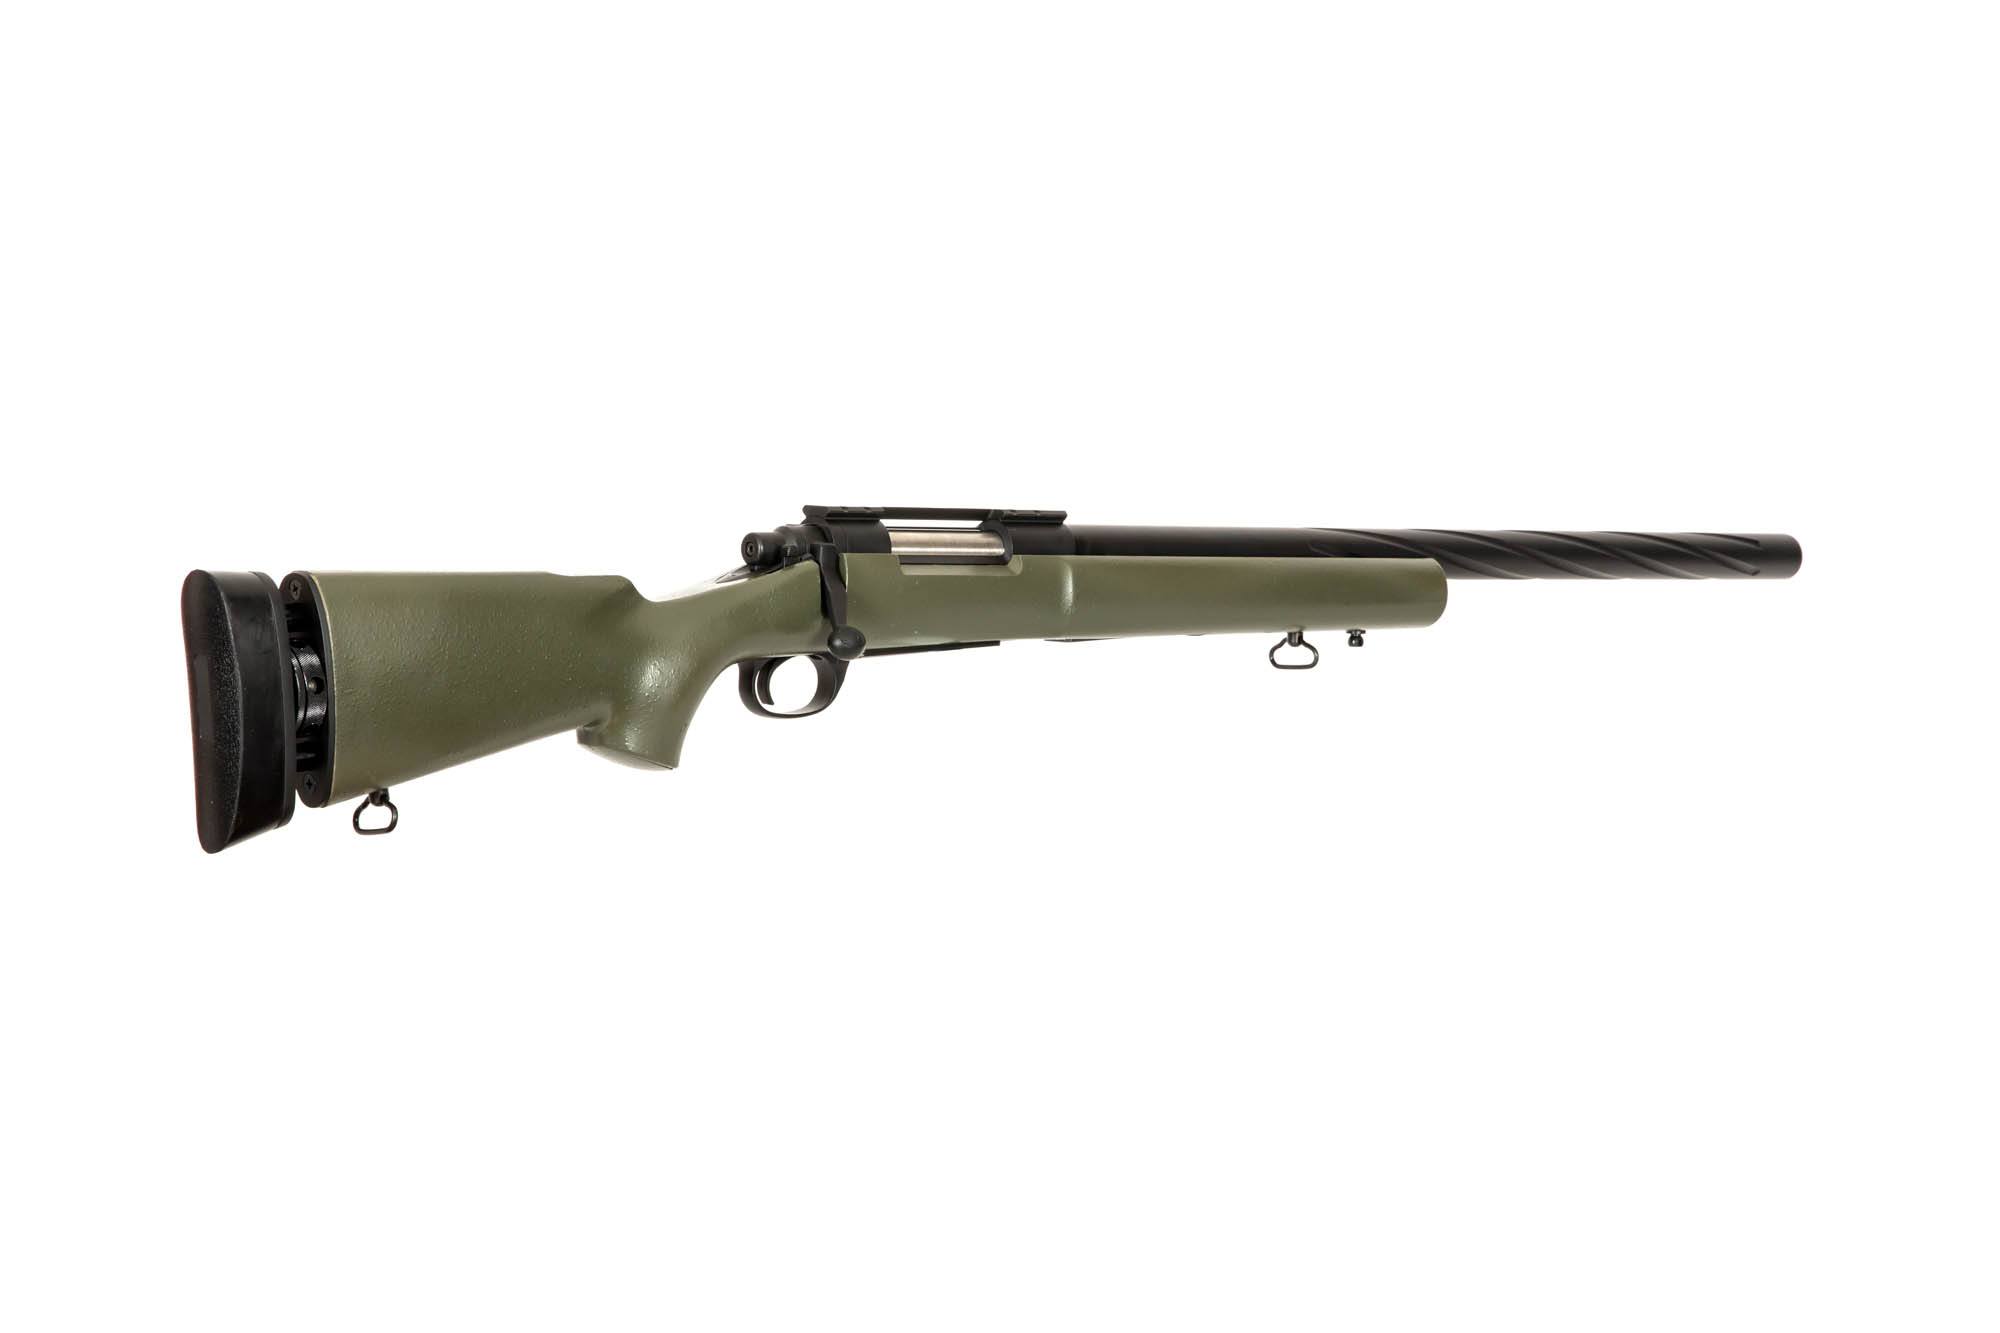 SW-04D Upgraded Sniper Rifle Replica - olive